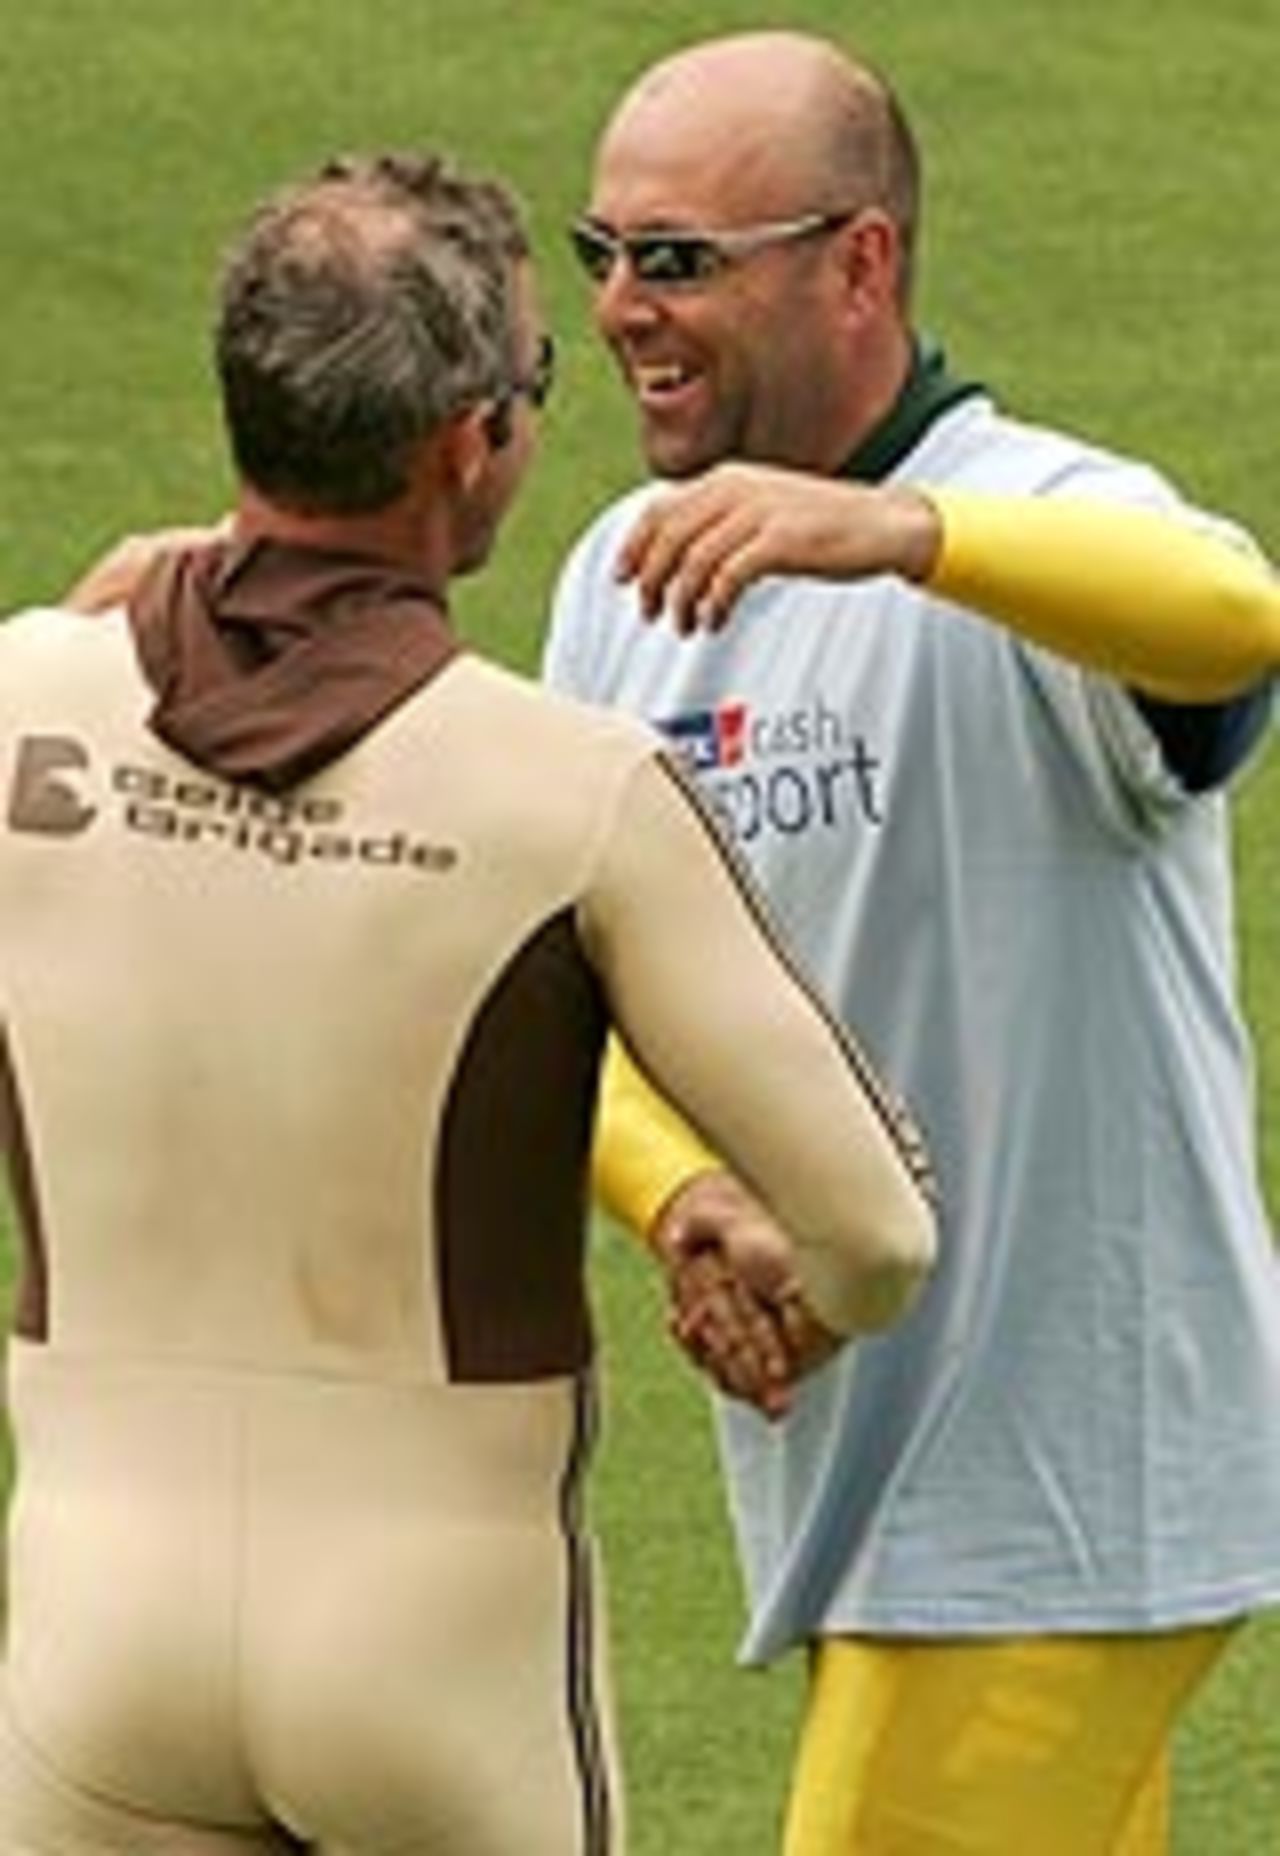 Mark Richardson and Darren Lehmann embrace after their sprint race, Australia v New Zealand, 2nd Test, Adelaide, November 30, 2004